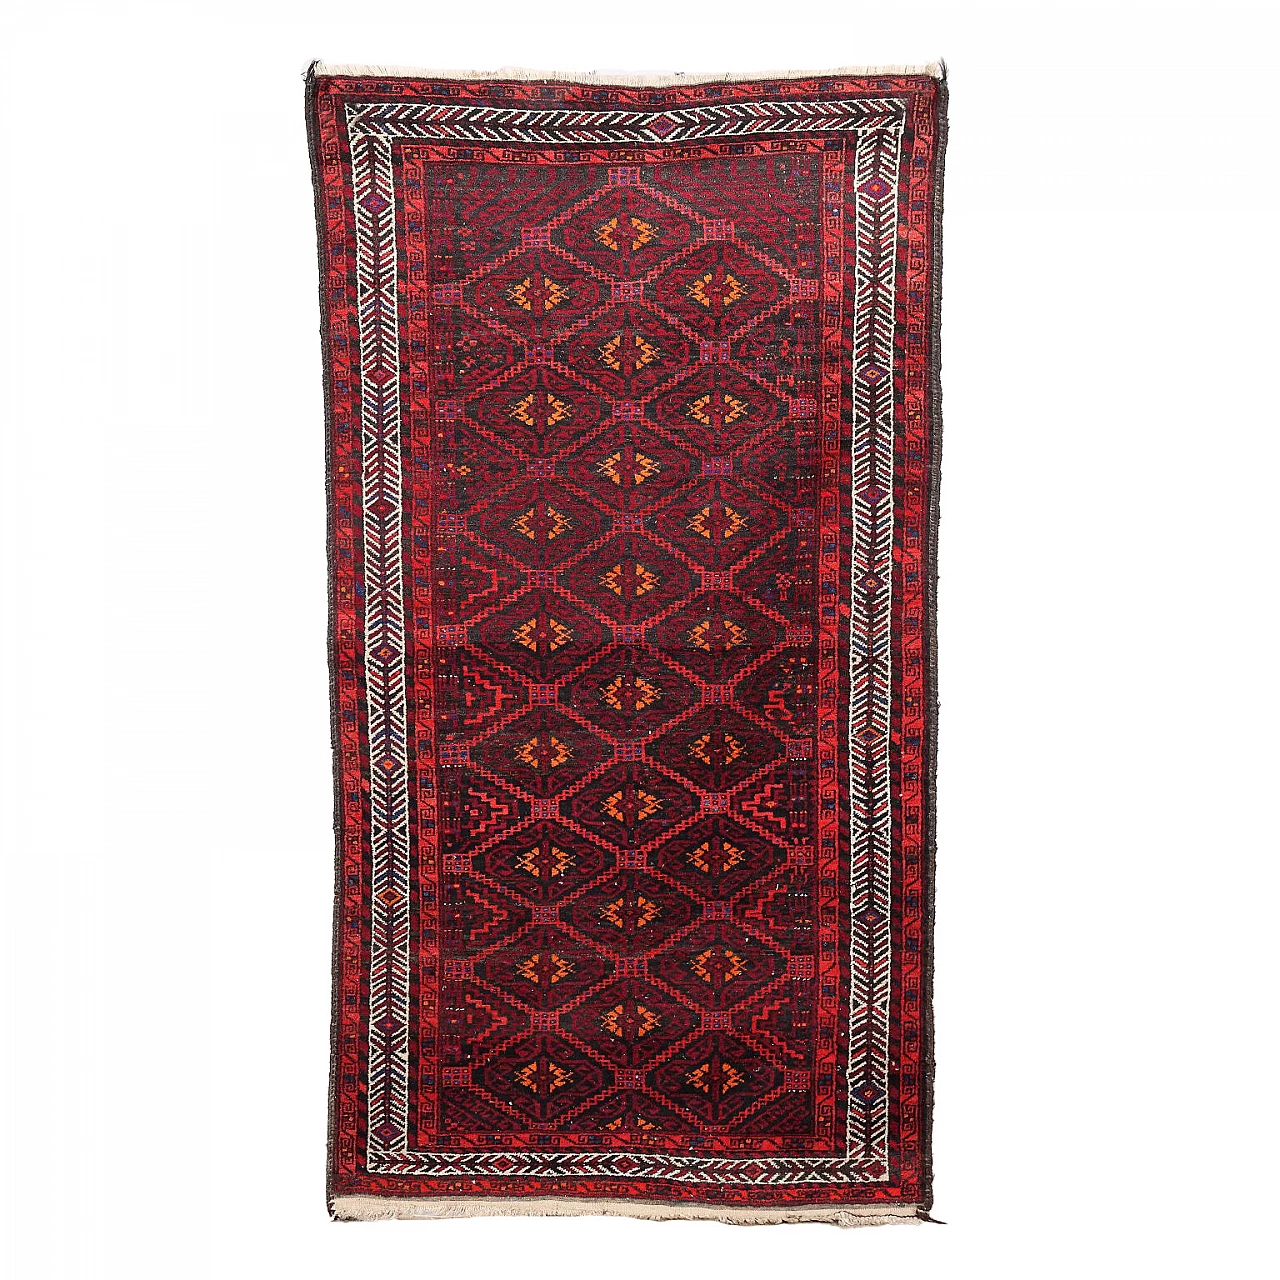 Iranian Beluchi rug 1